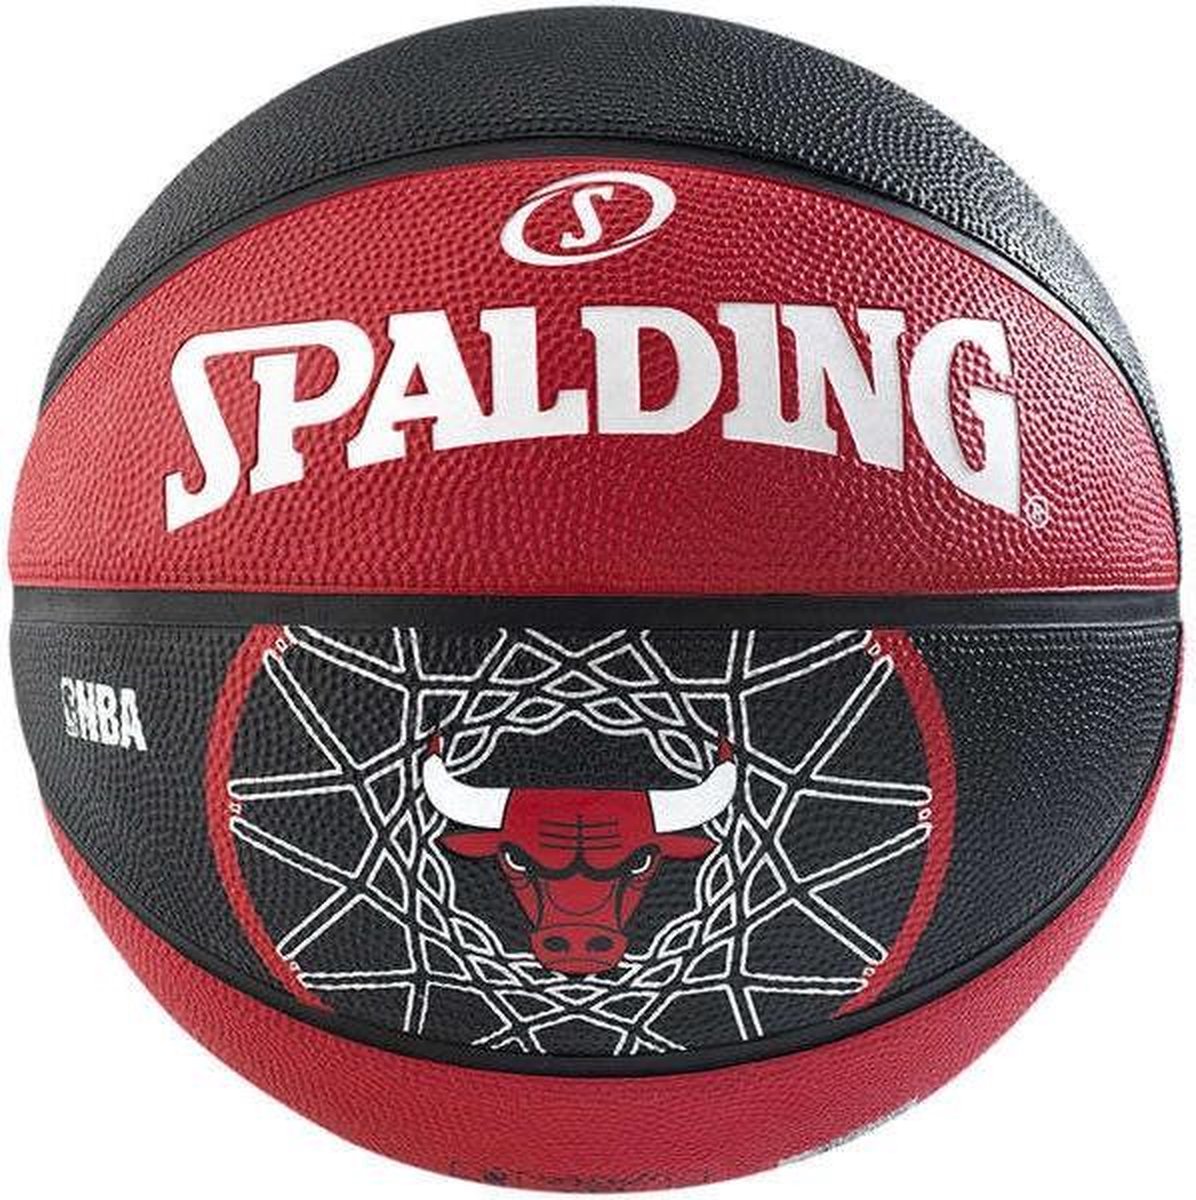 Spalding Basketbal Chicago Bulls maat 5 | bol.com